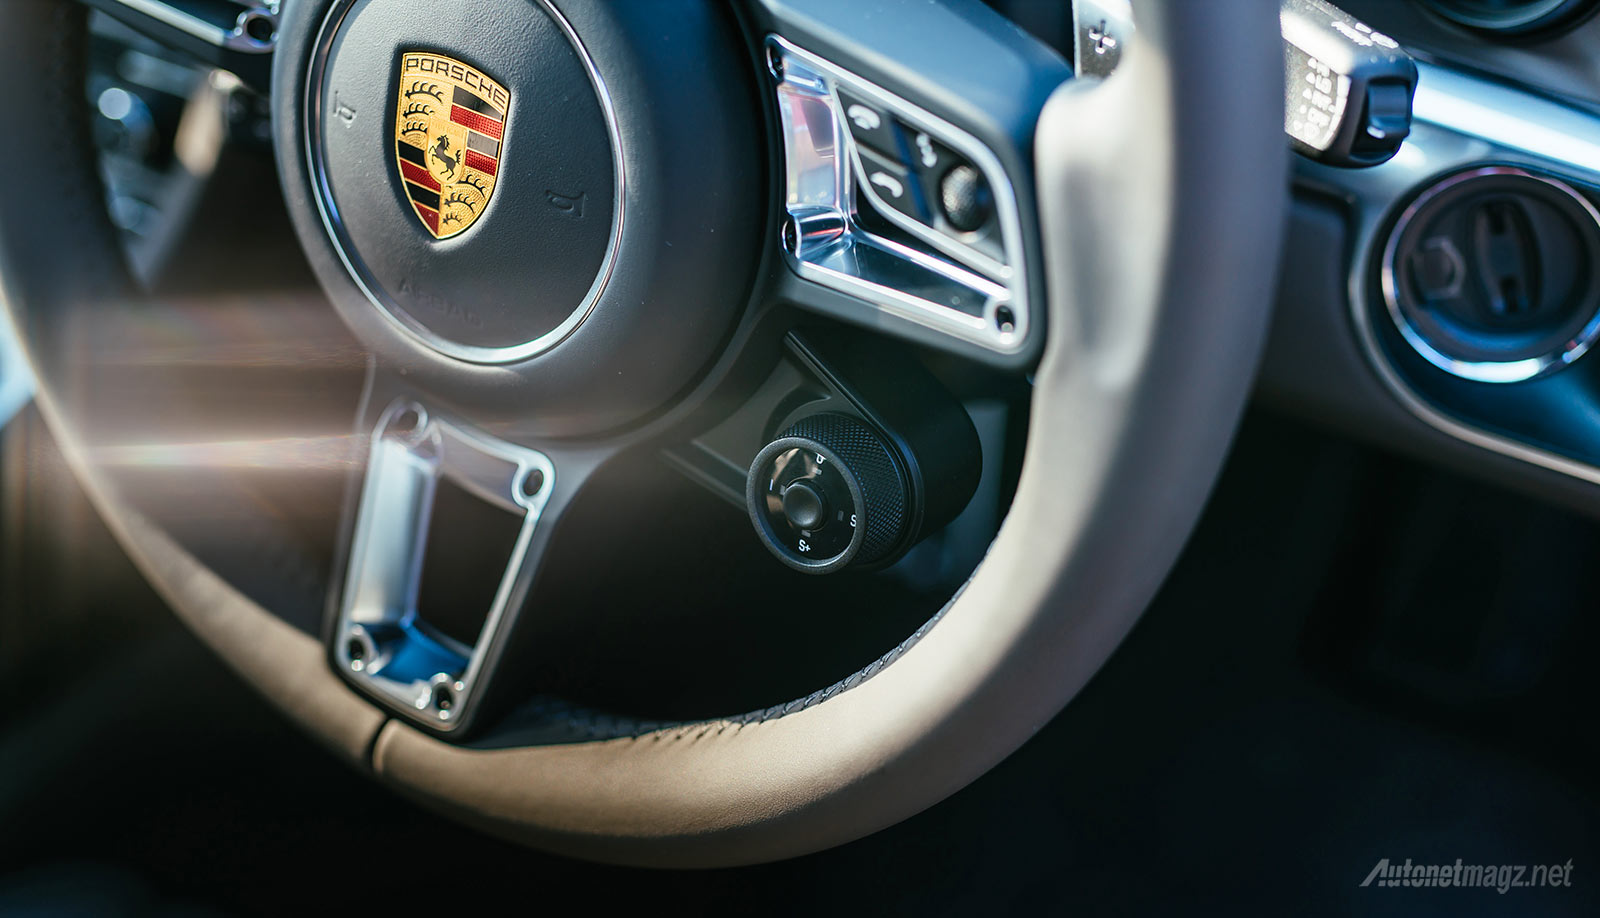 International, Setir Porsche 911 Carrera S steering wheels: First Impression Review Porsche 911 Carrera S